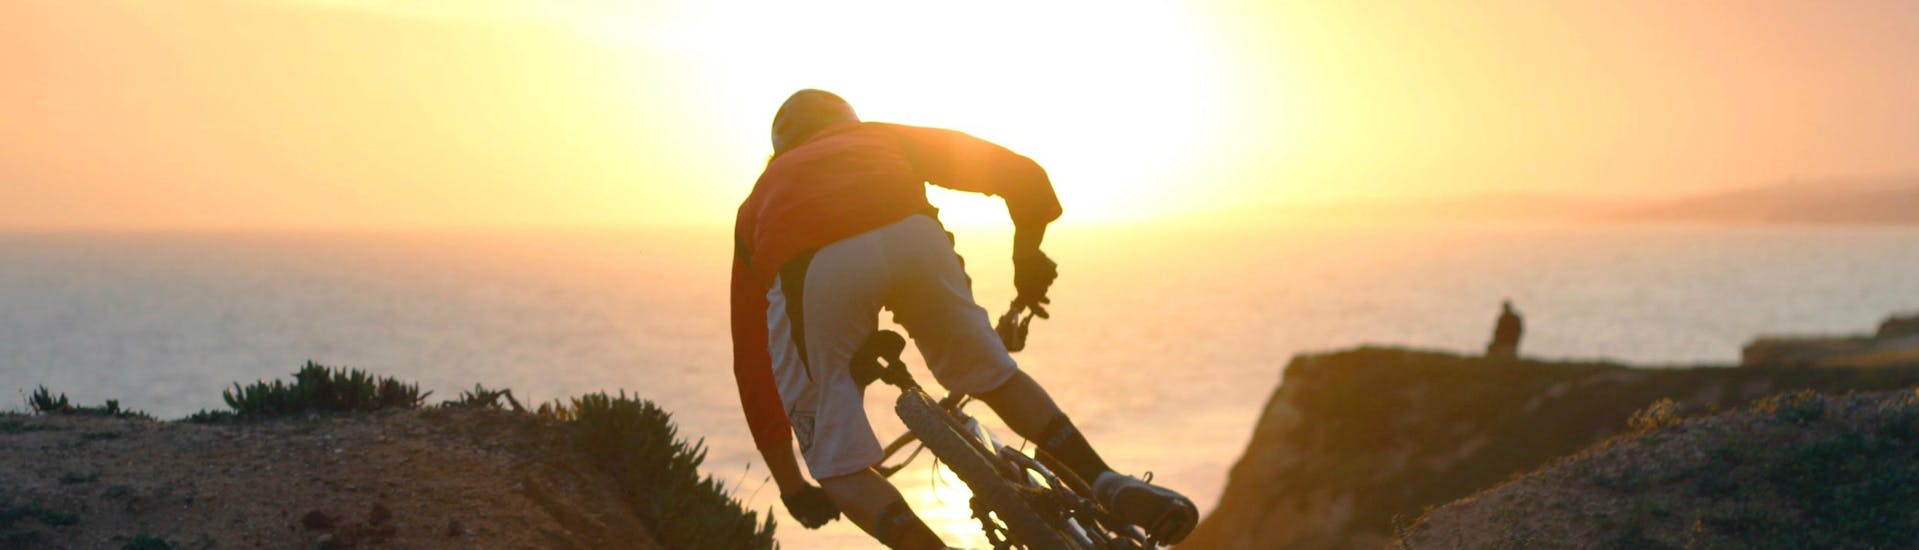 Mountainbike Sunset Tour - Algarve.